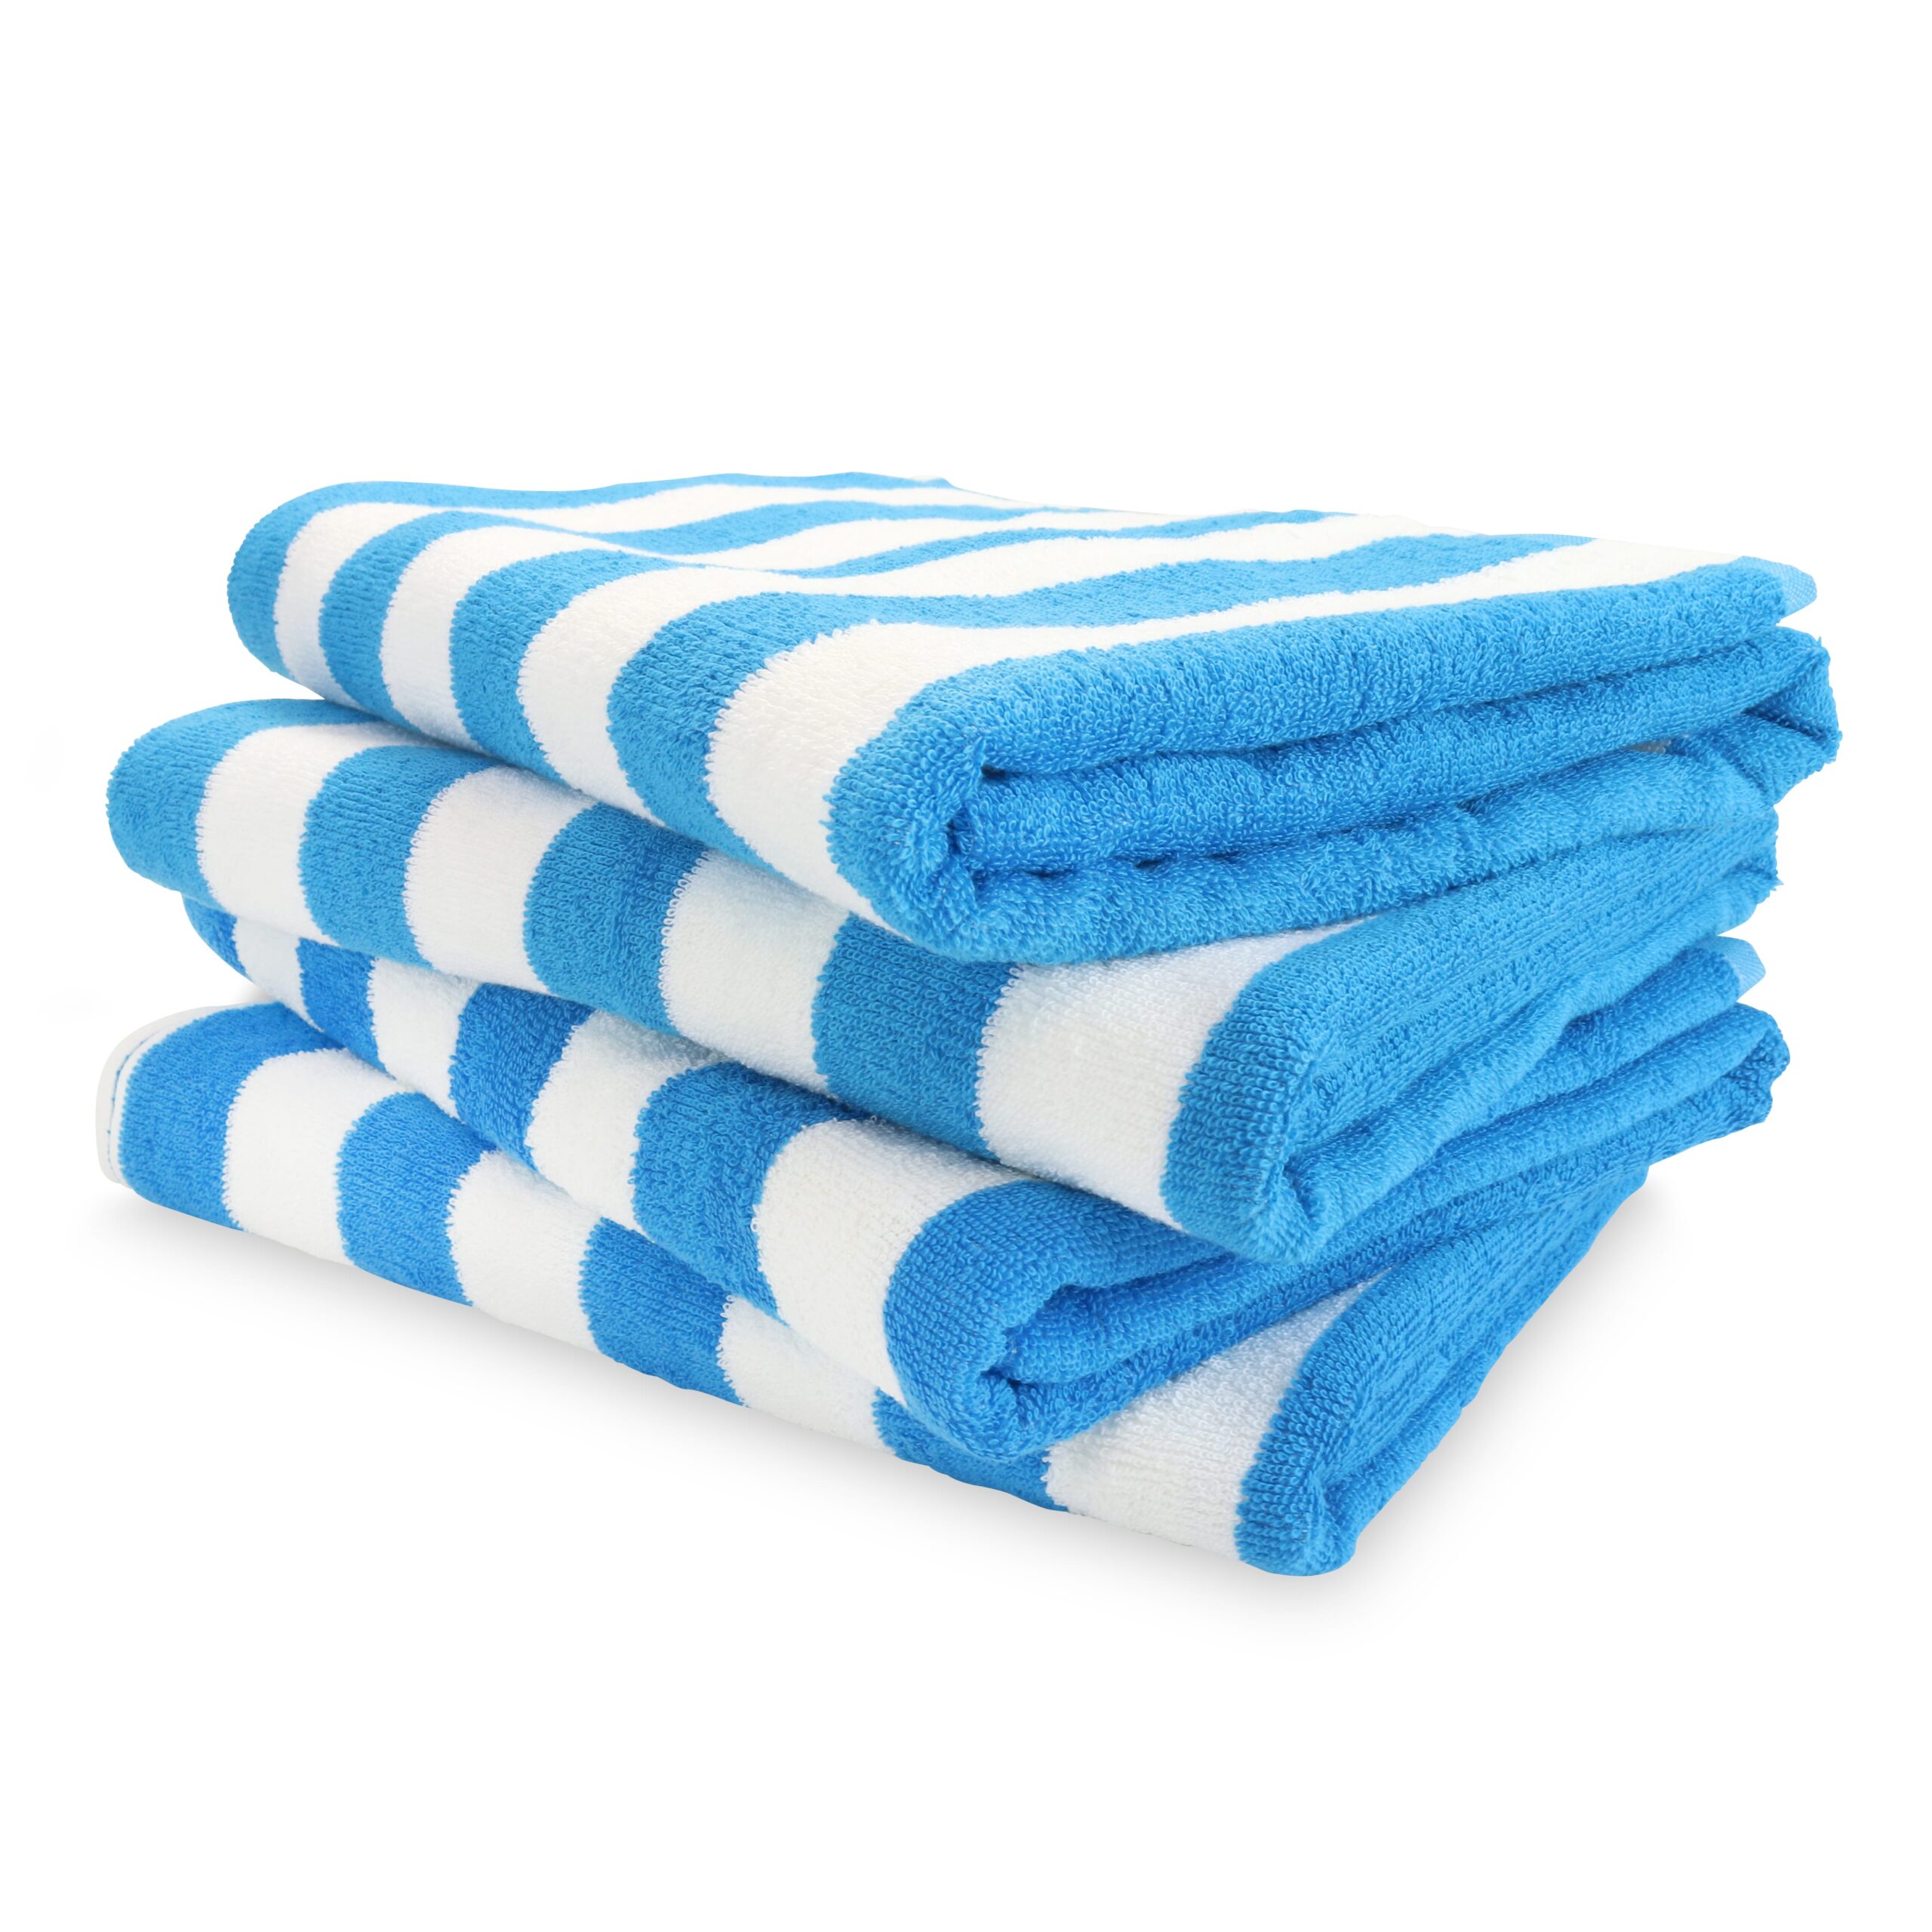 California Cabana Towel - Blue